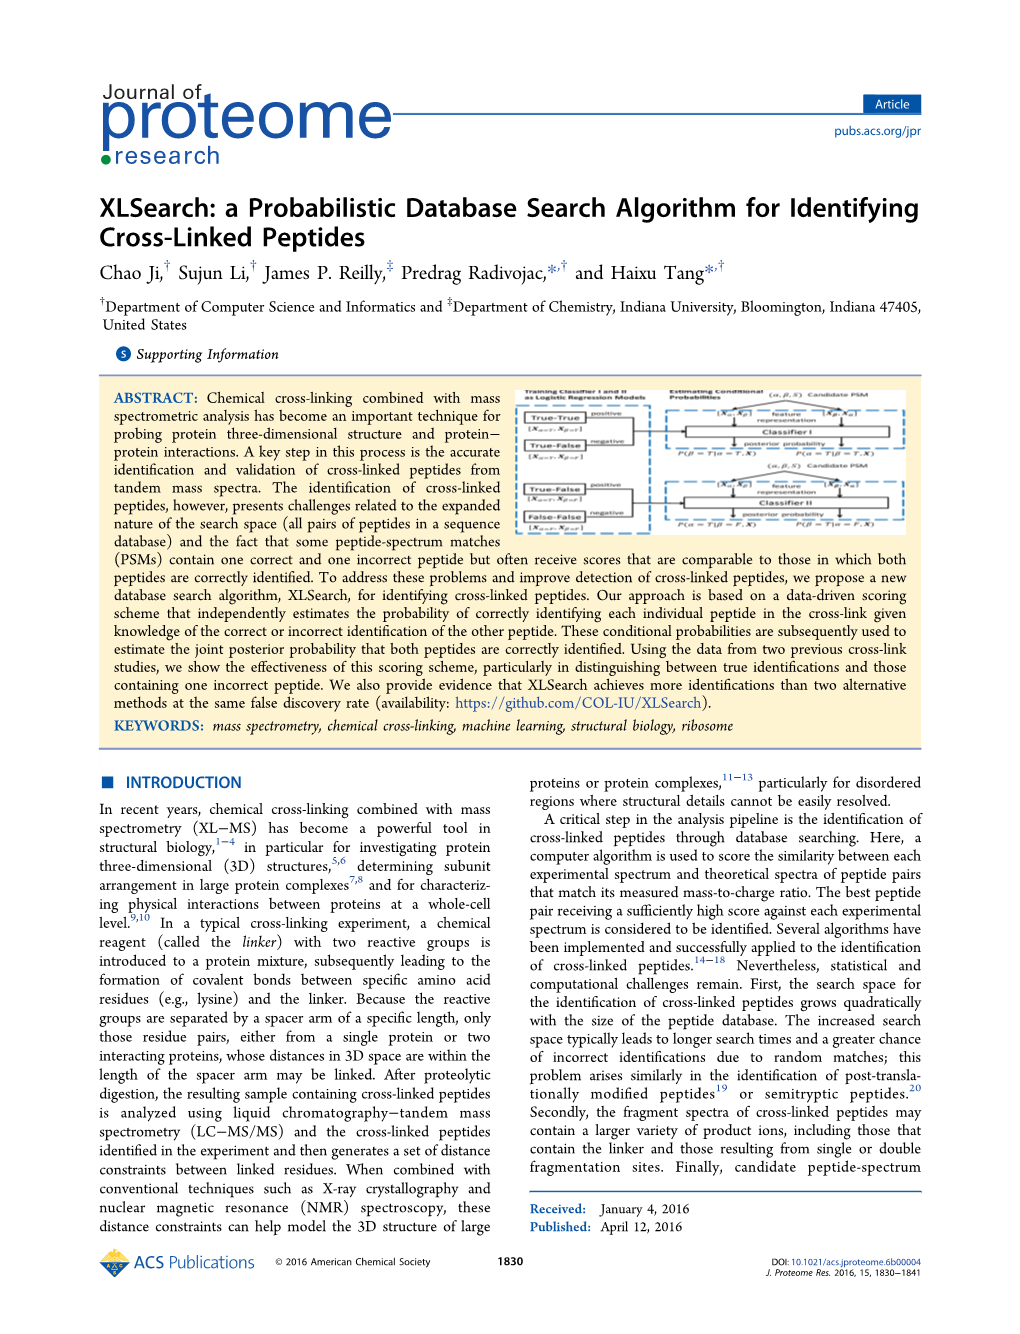 A Probabilistic Database Search Algorithm for Identifying Cross-Linked Peptides † † ‡ † † Chao Ji, Sujun Li, James P